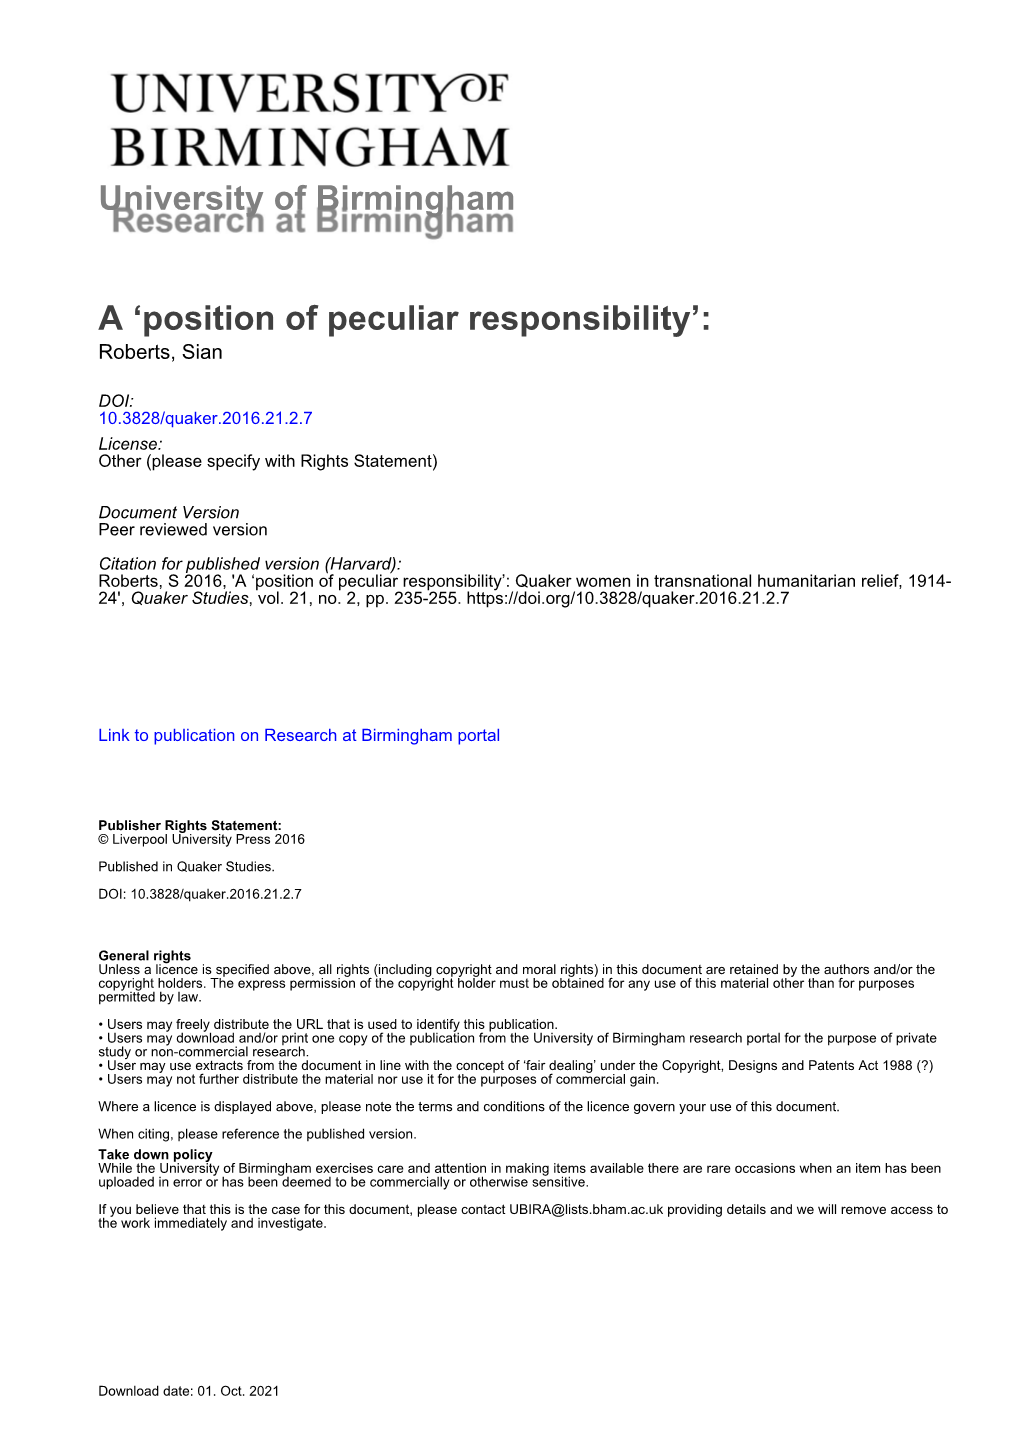 University of Birmingham a 'Position of Peculiar Responsibility'